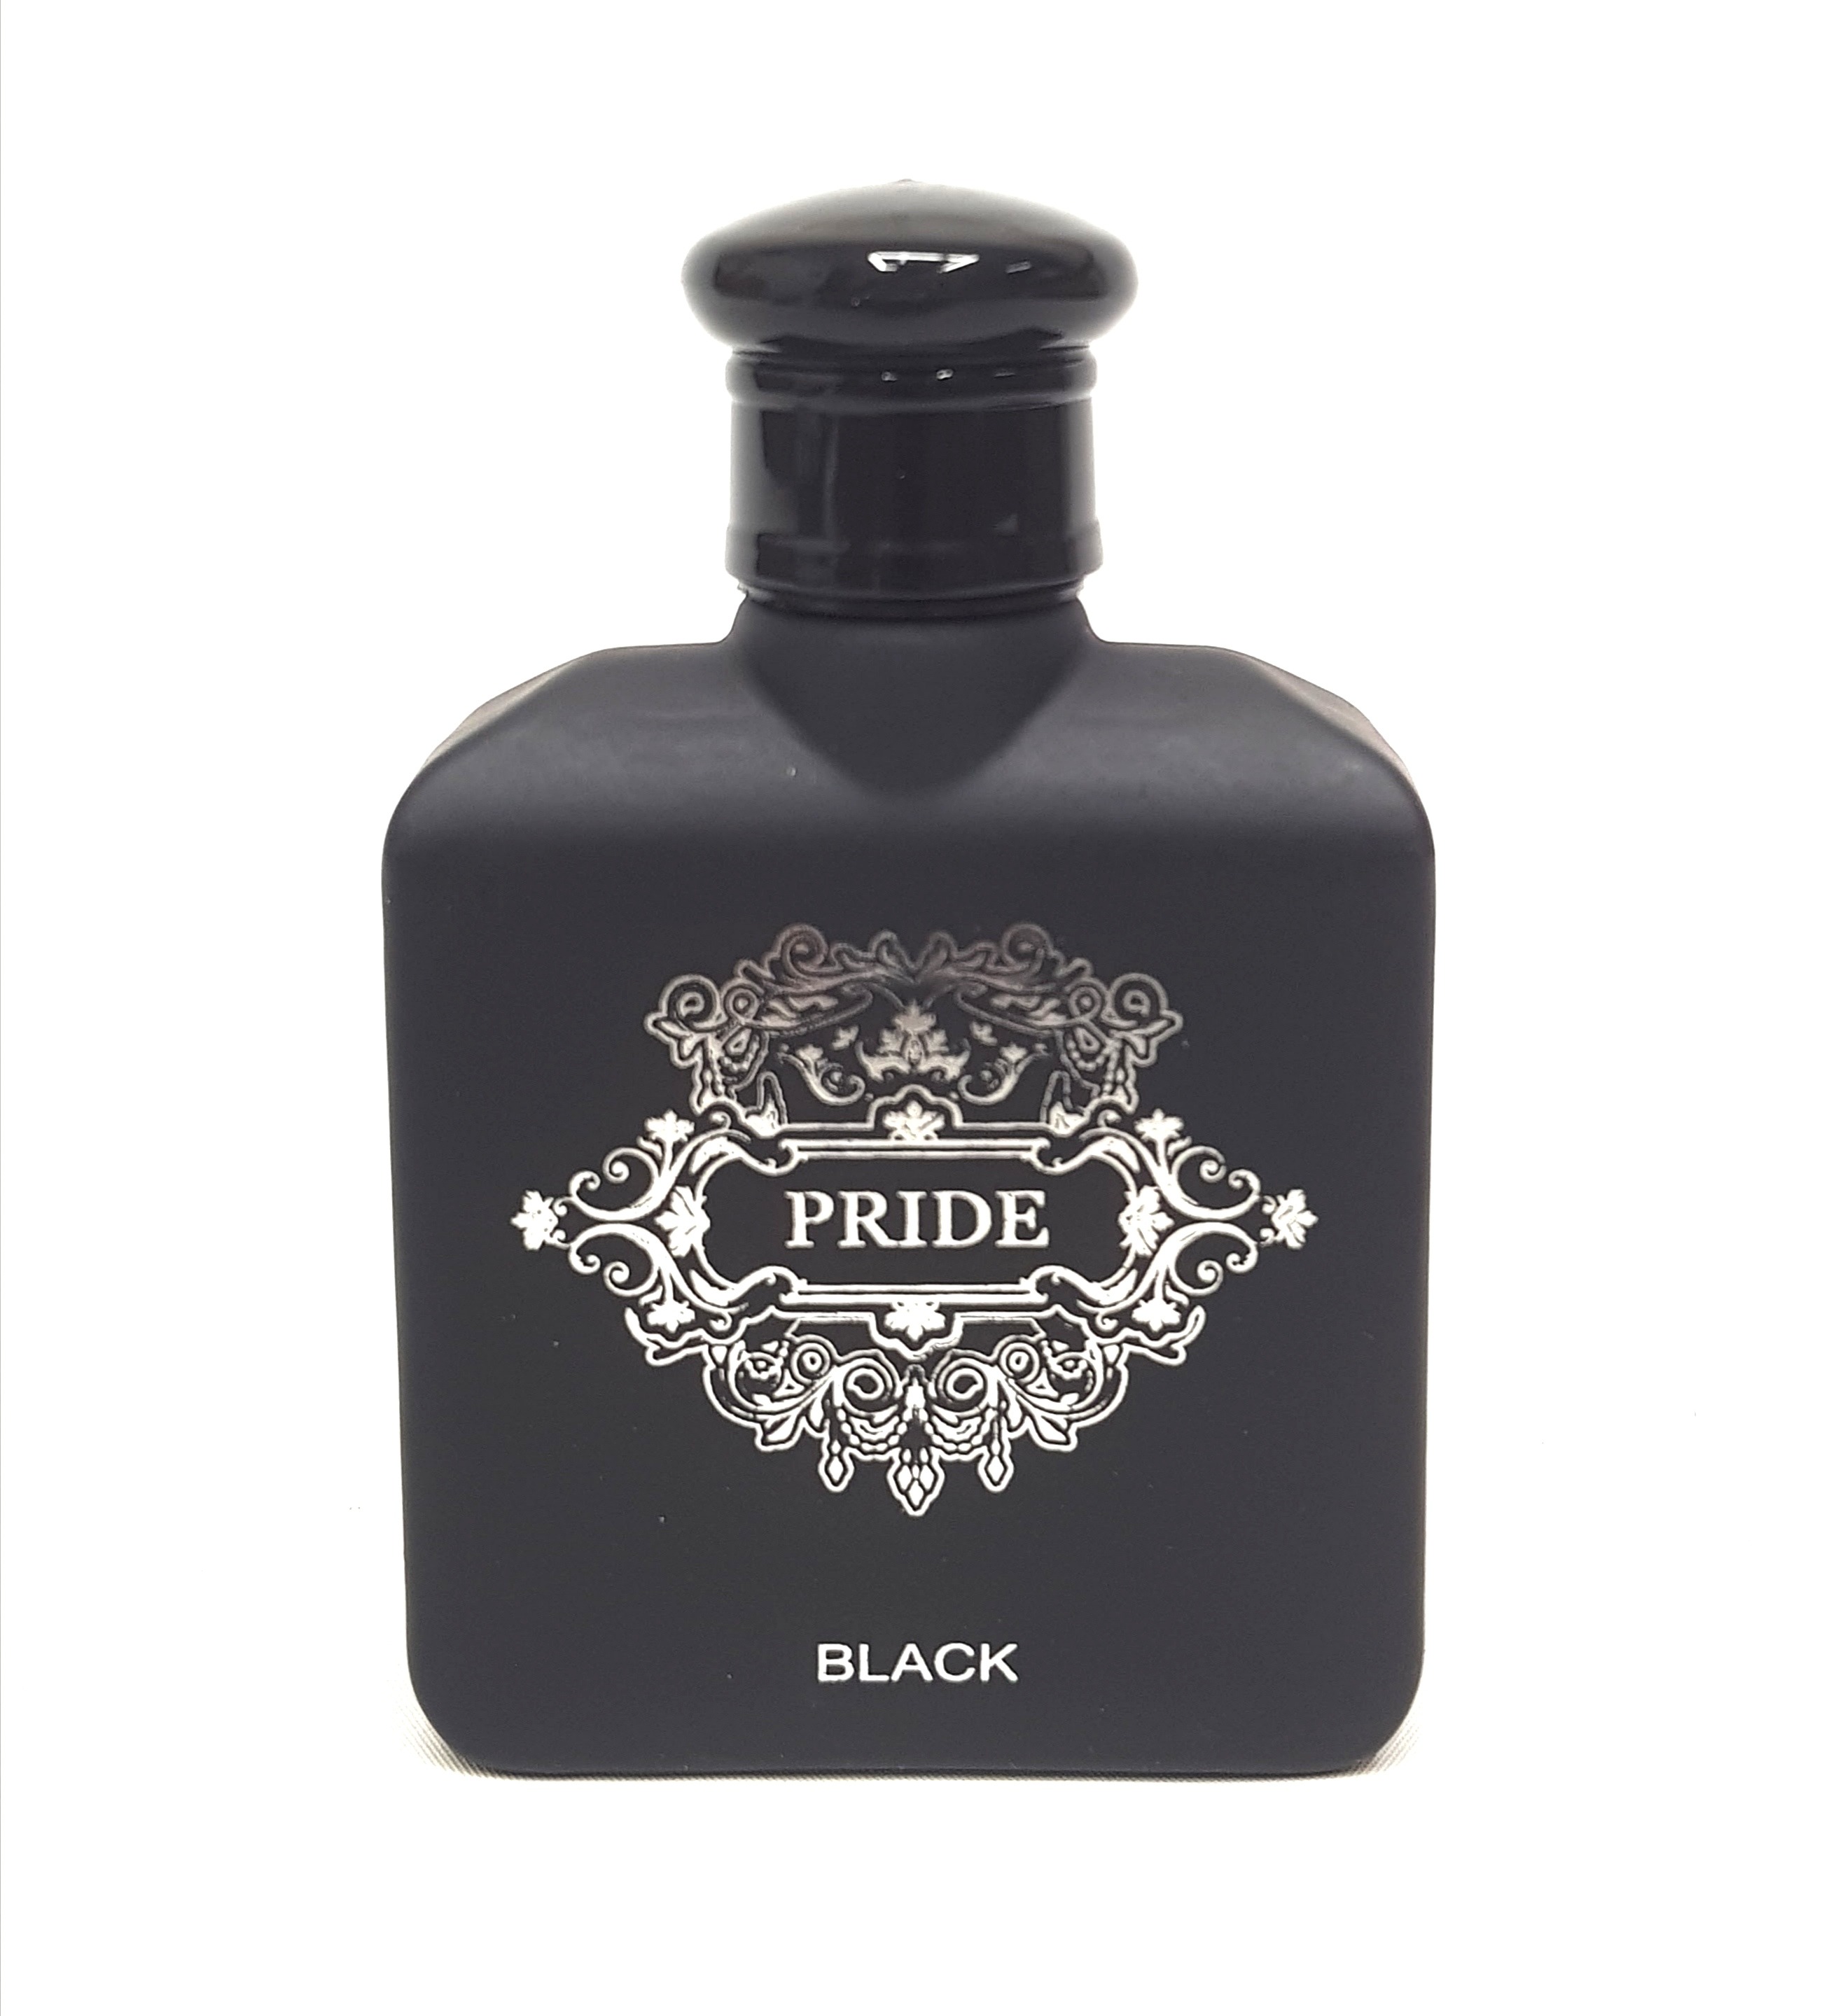 ادکلن مردانه Pride Black Eau De Toilette 100ML کد 409049